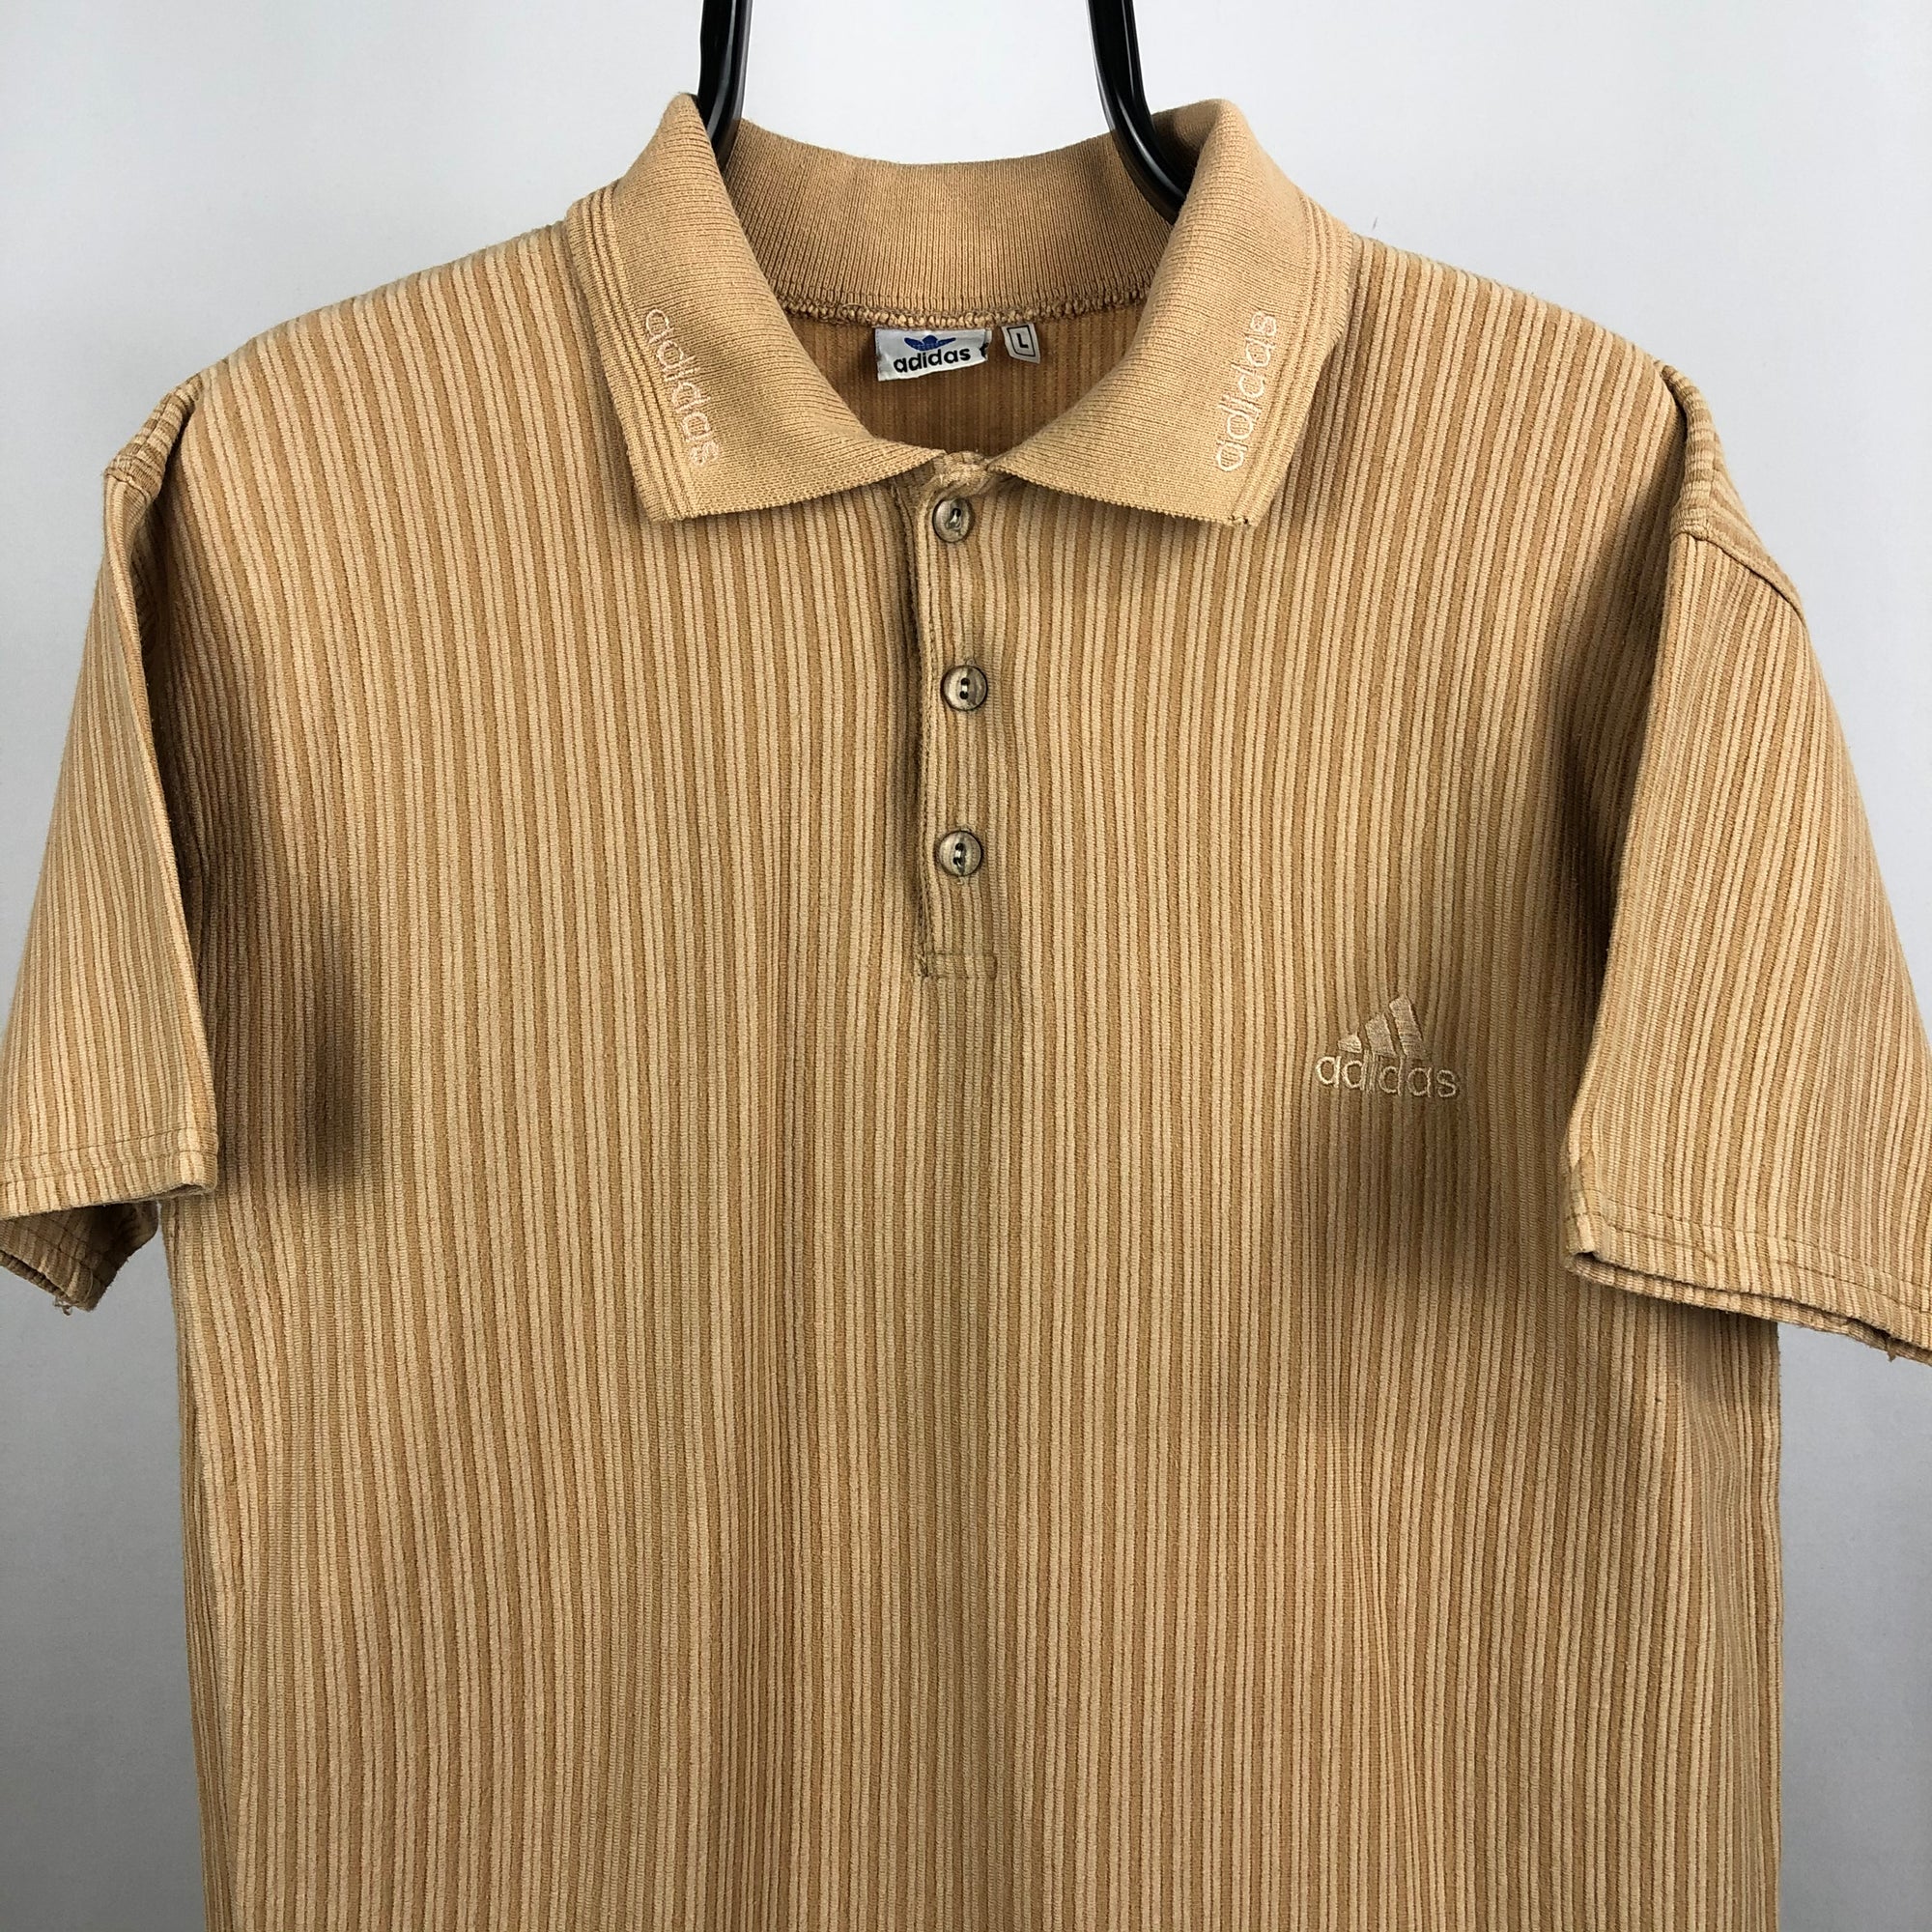 Vintage Adidas Polo Shirt in Peach - Men's Medium/Women's Large